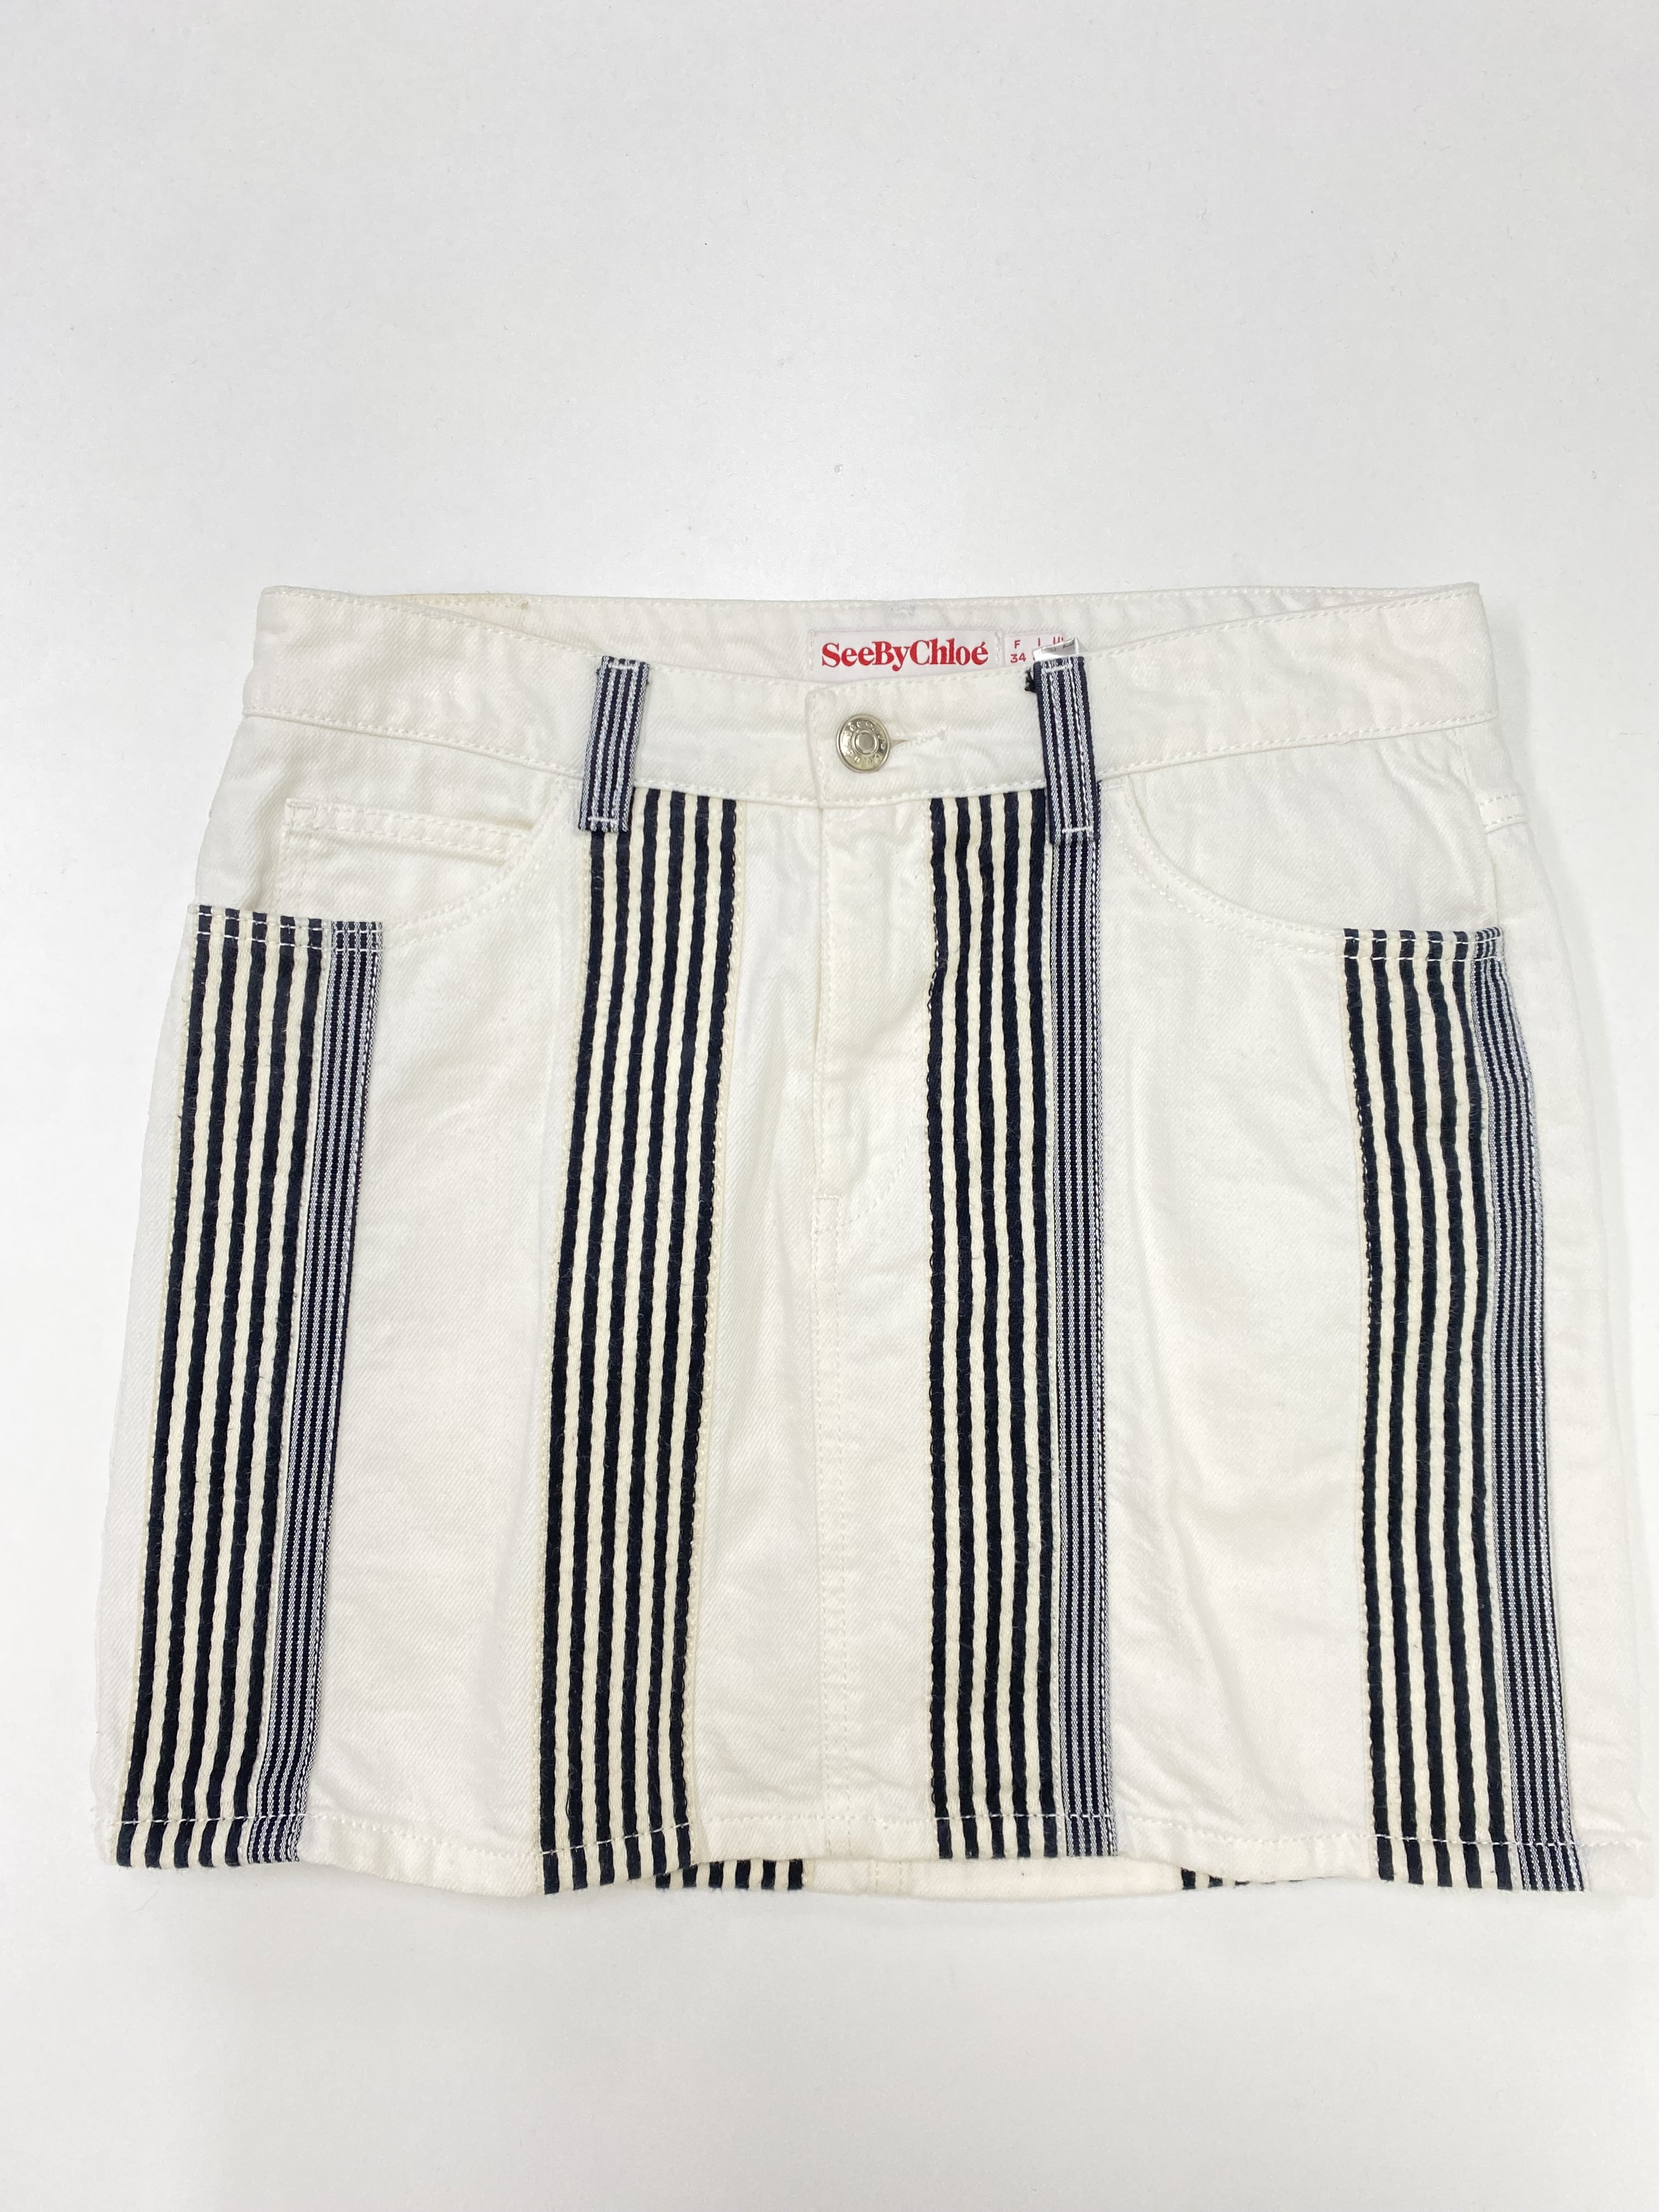 See by chloe whitrle black stripe denim skirt(made in italy) [27inch]